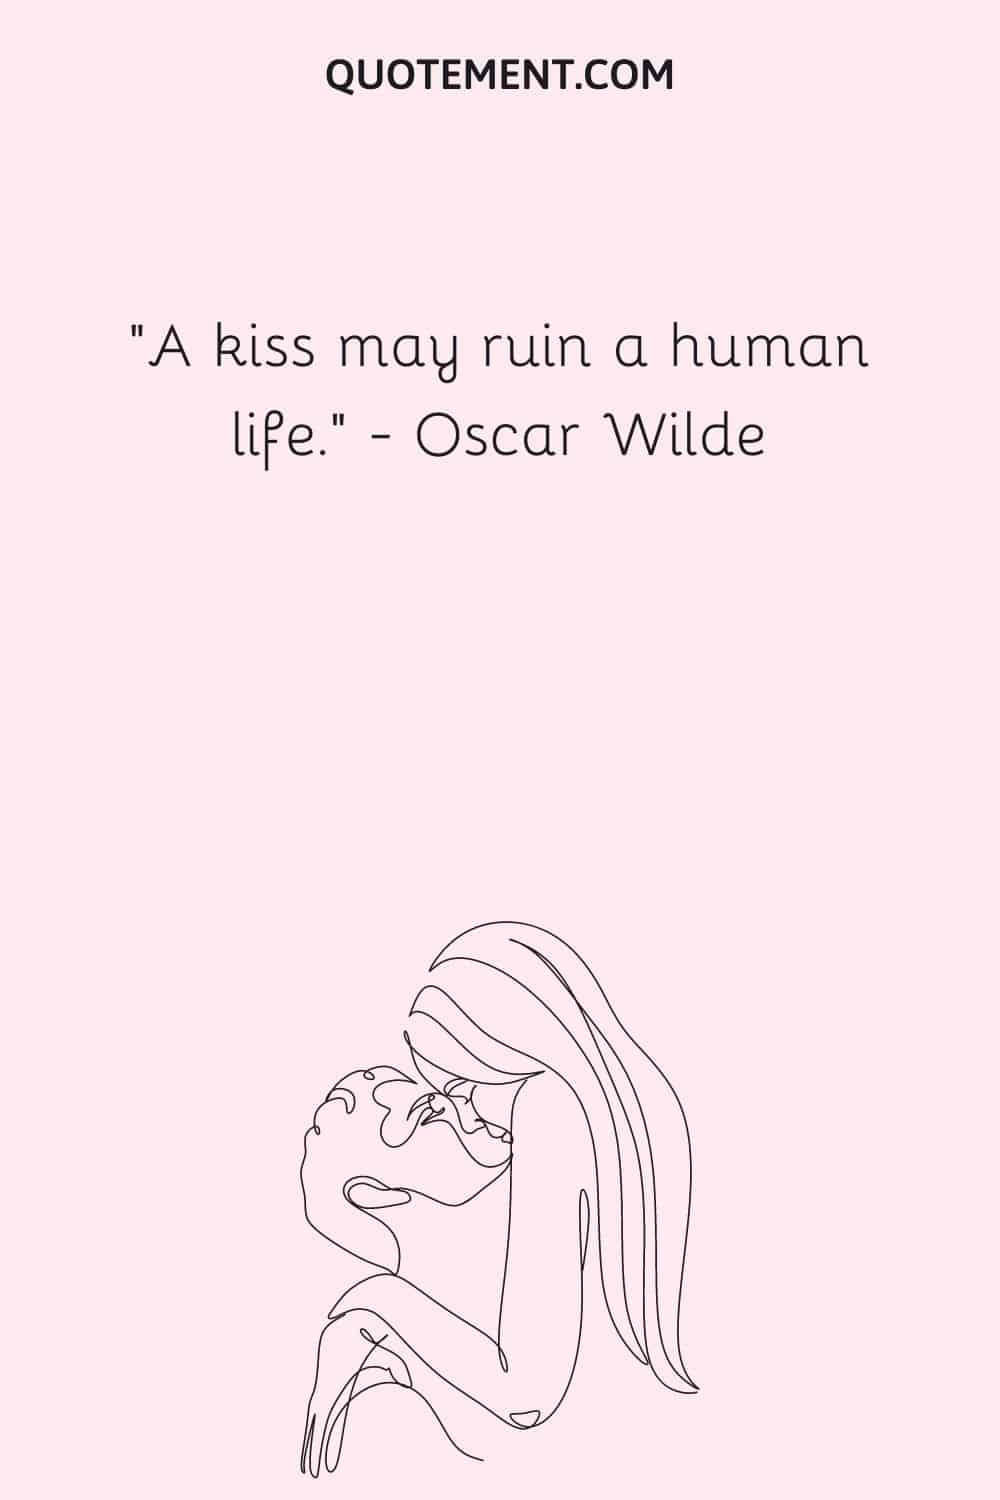 A kiss may ruin a human life. ― Oscar Wilde